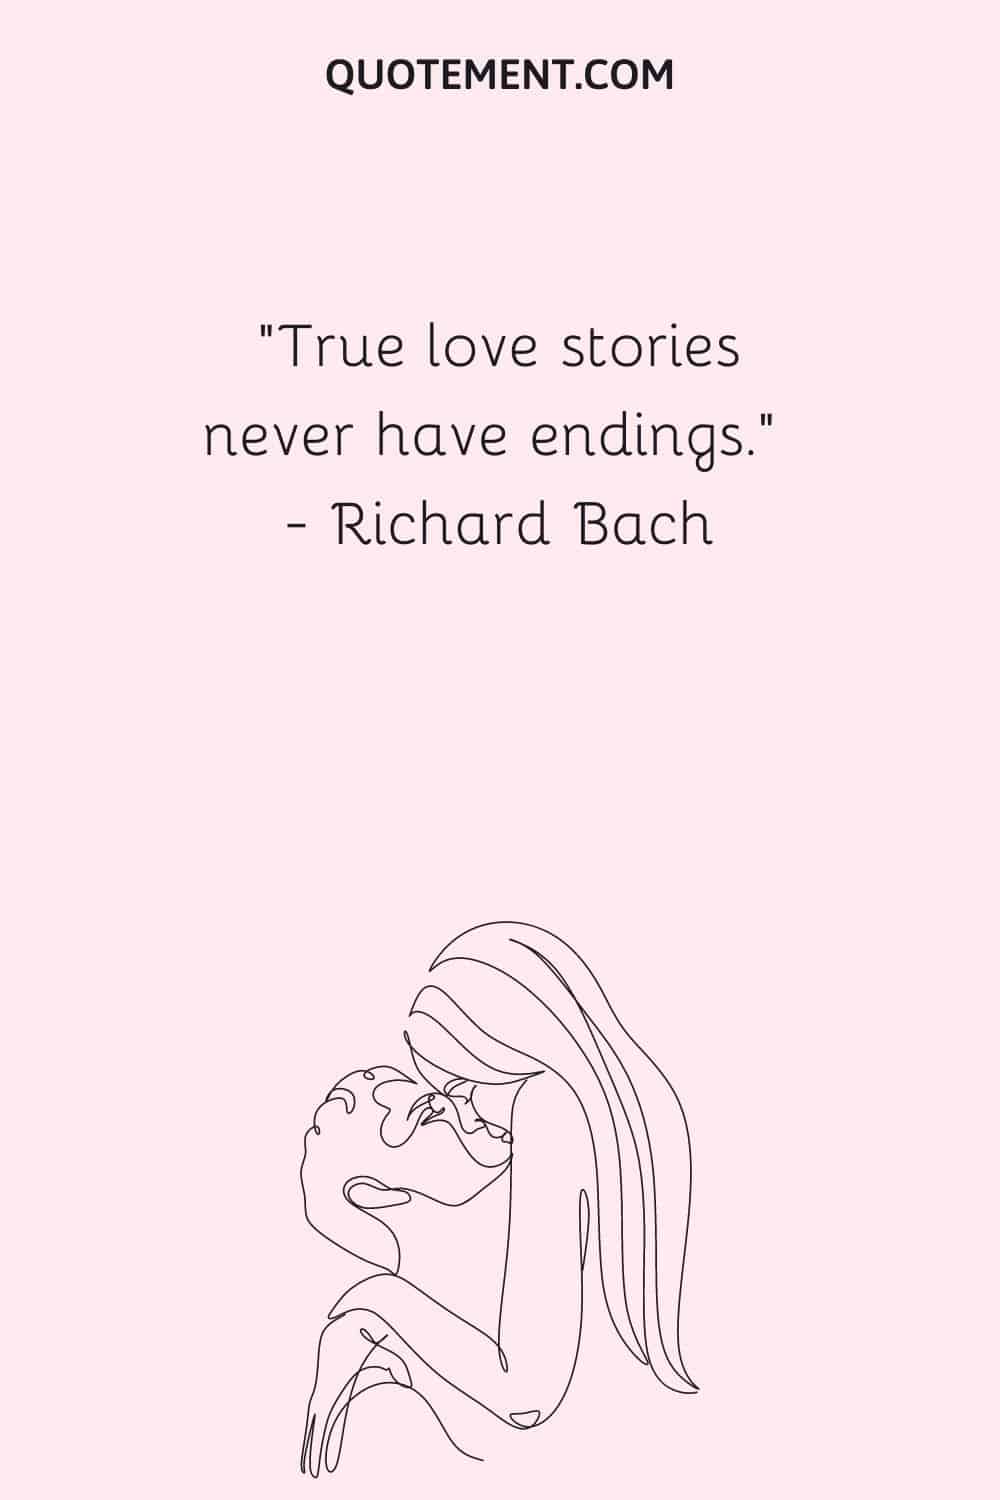 True love stories never have endings. ― Richard Bach